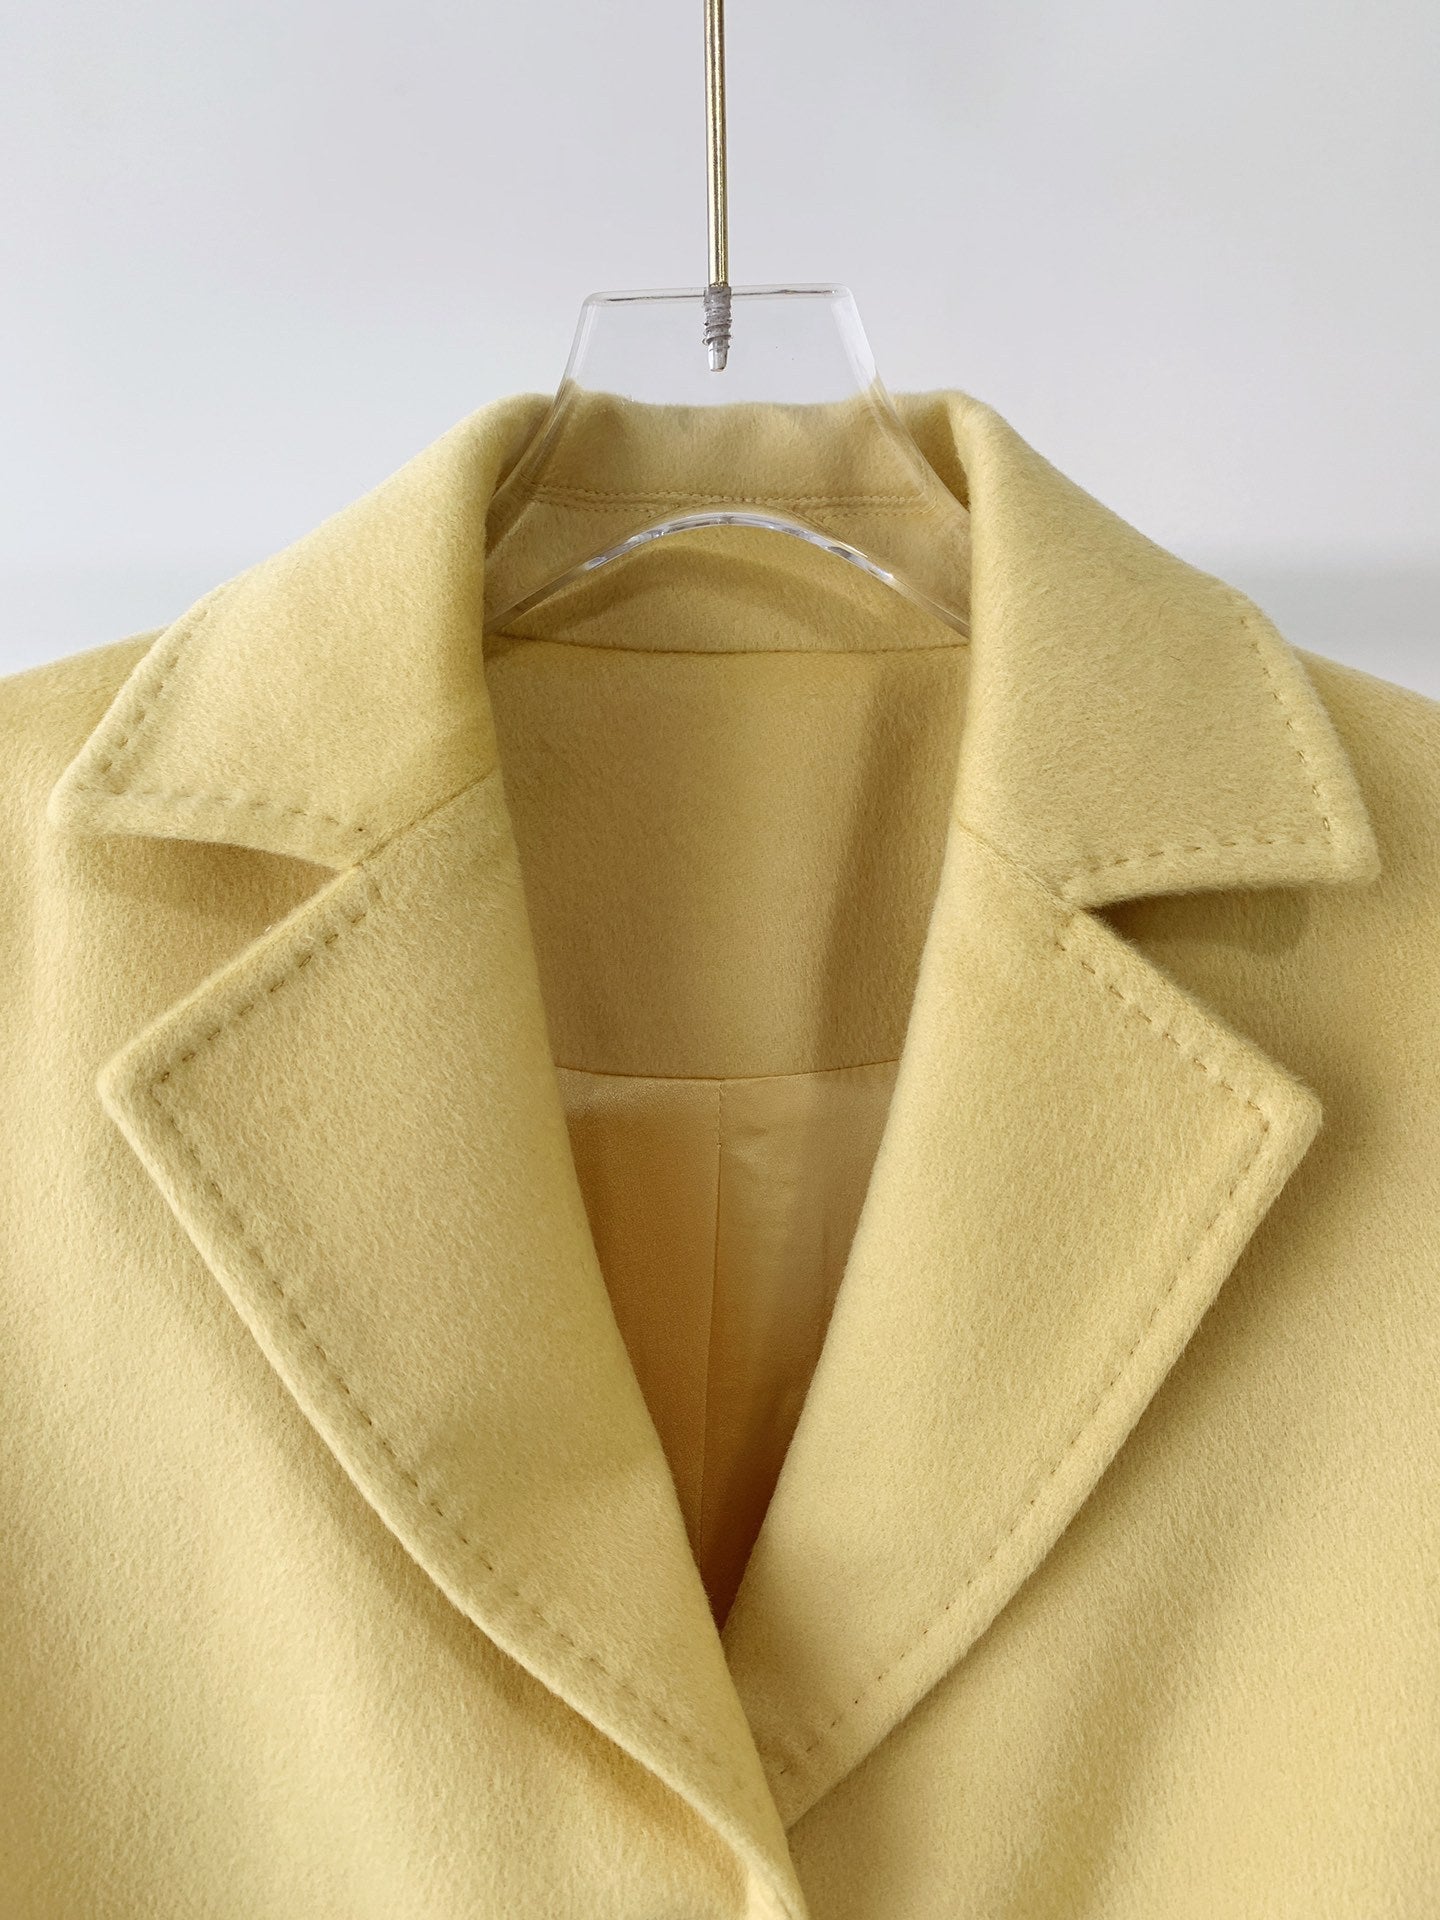 Blackpink Jisoo Inspired Yellow Jacket And Short Skirt